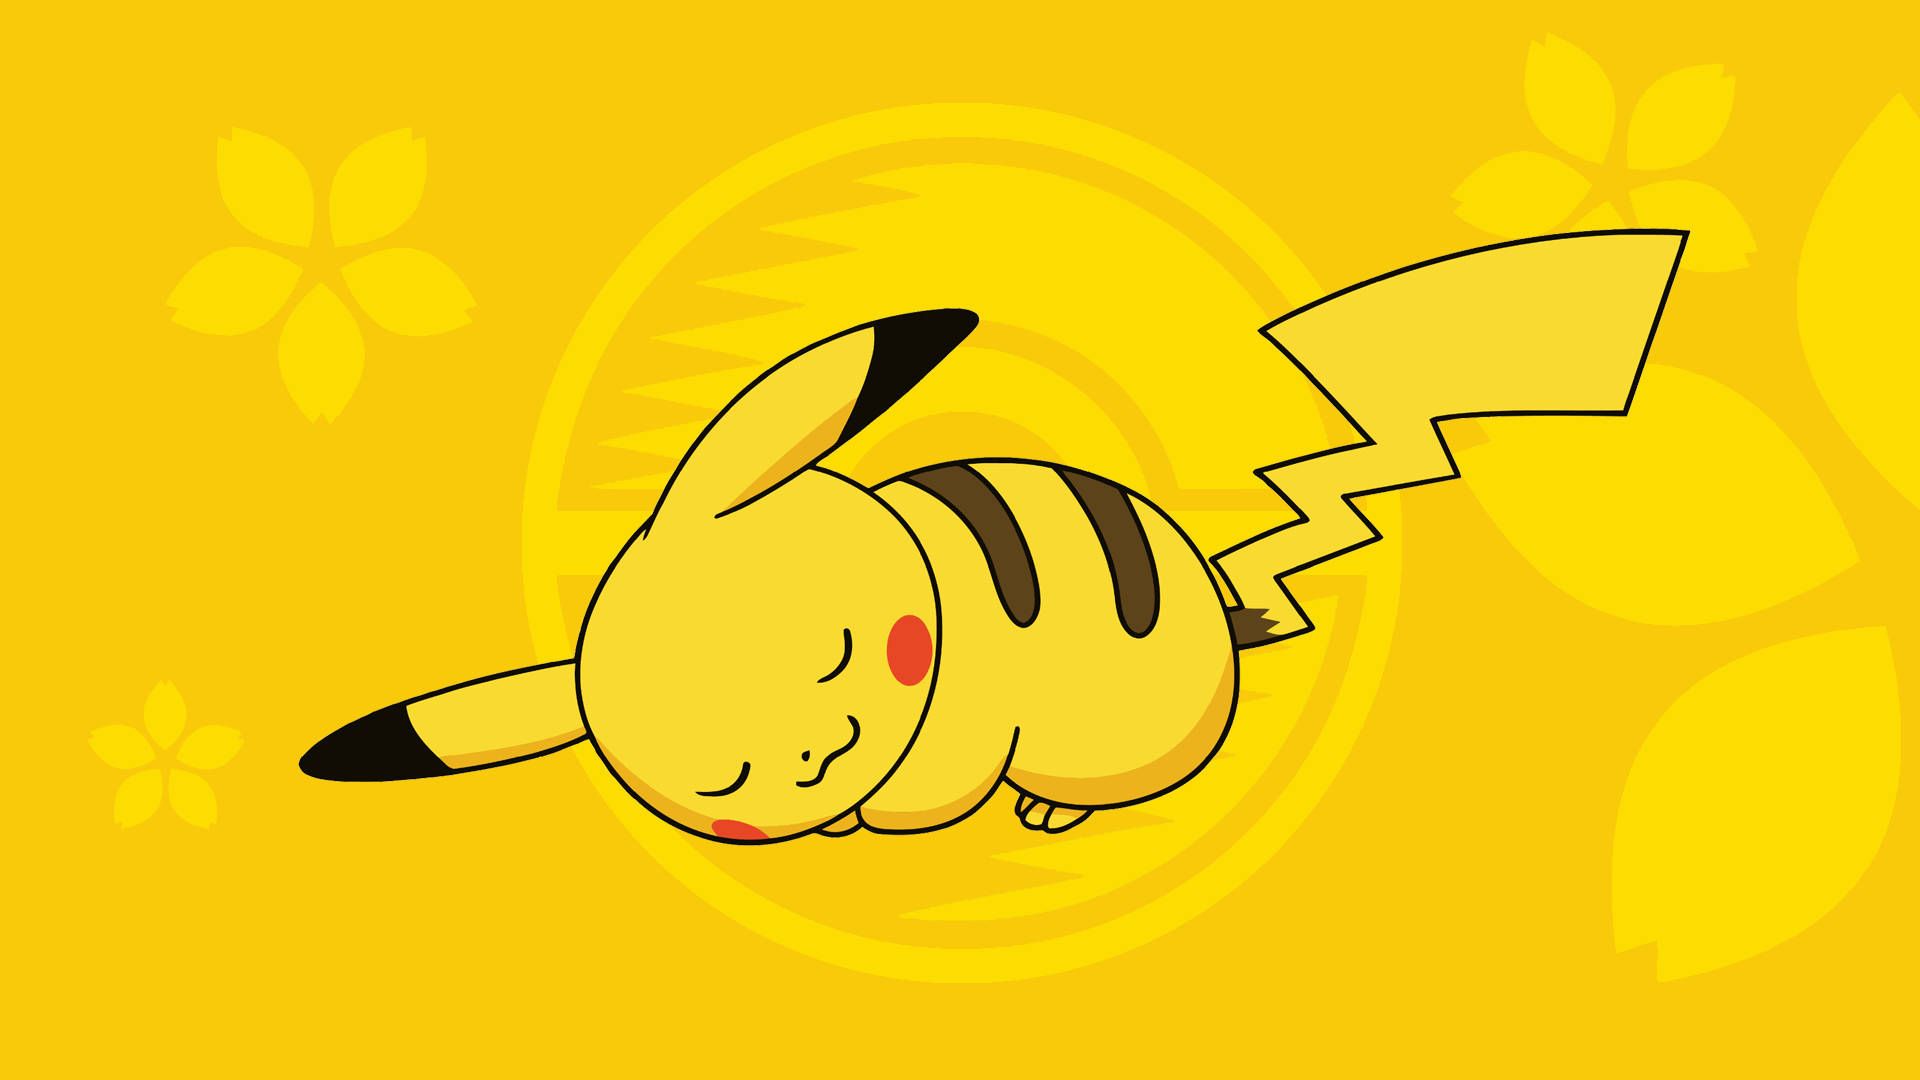 Download Pikachu 3D Peaceful Electric Type Pokémon Wallpaper